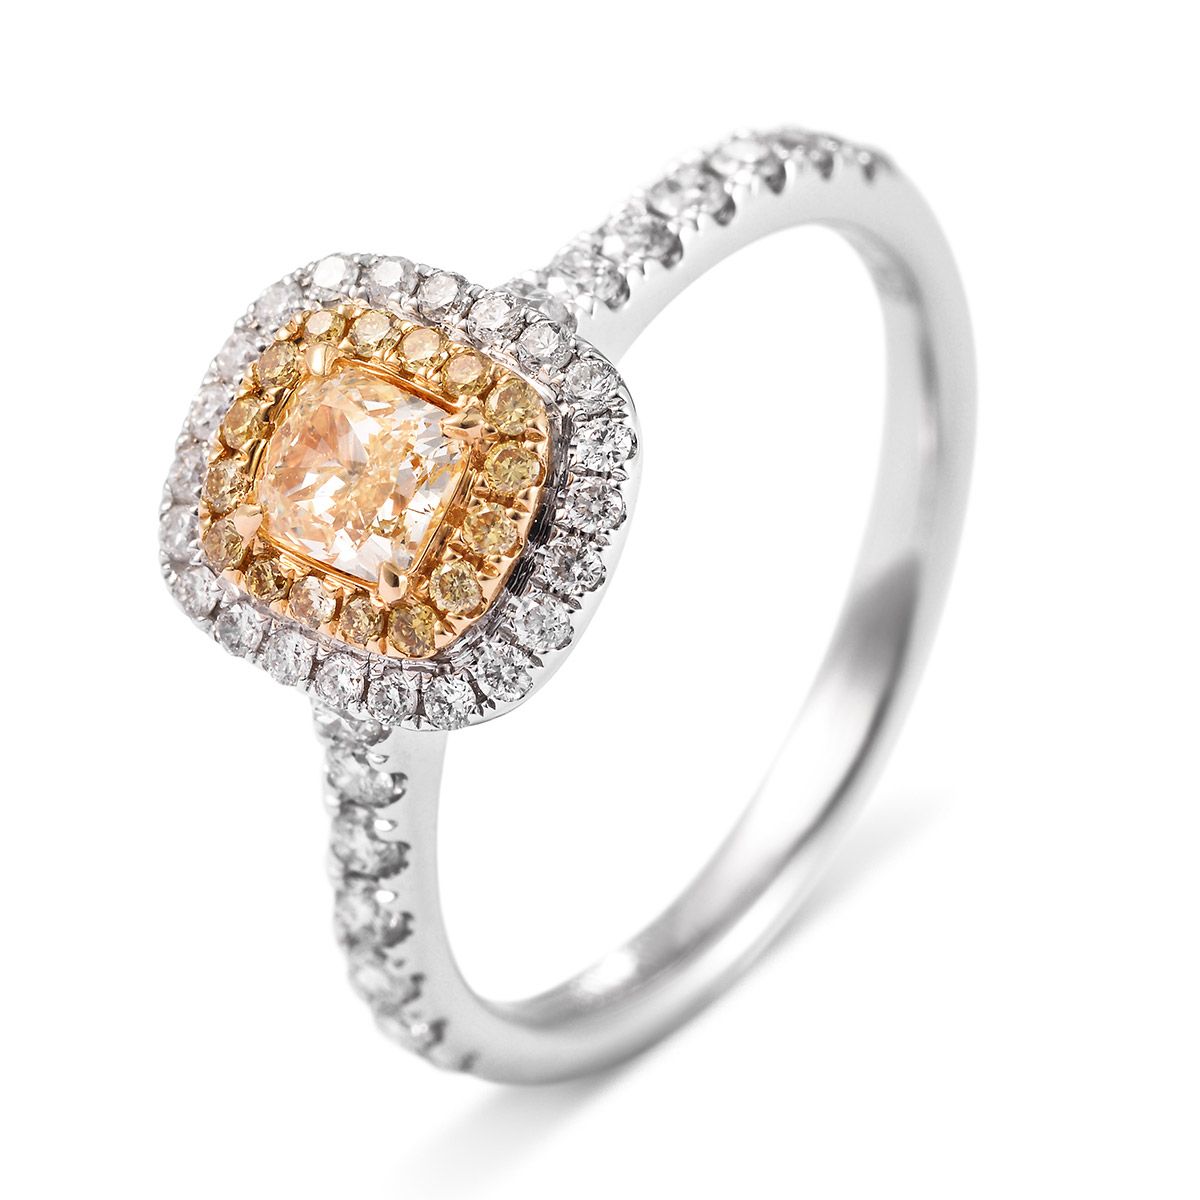 Fancy Yellow Diamond Ring, 0.75 Ct. TW, Cushion shape